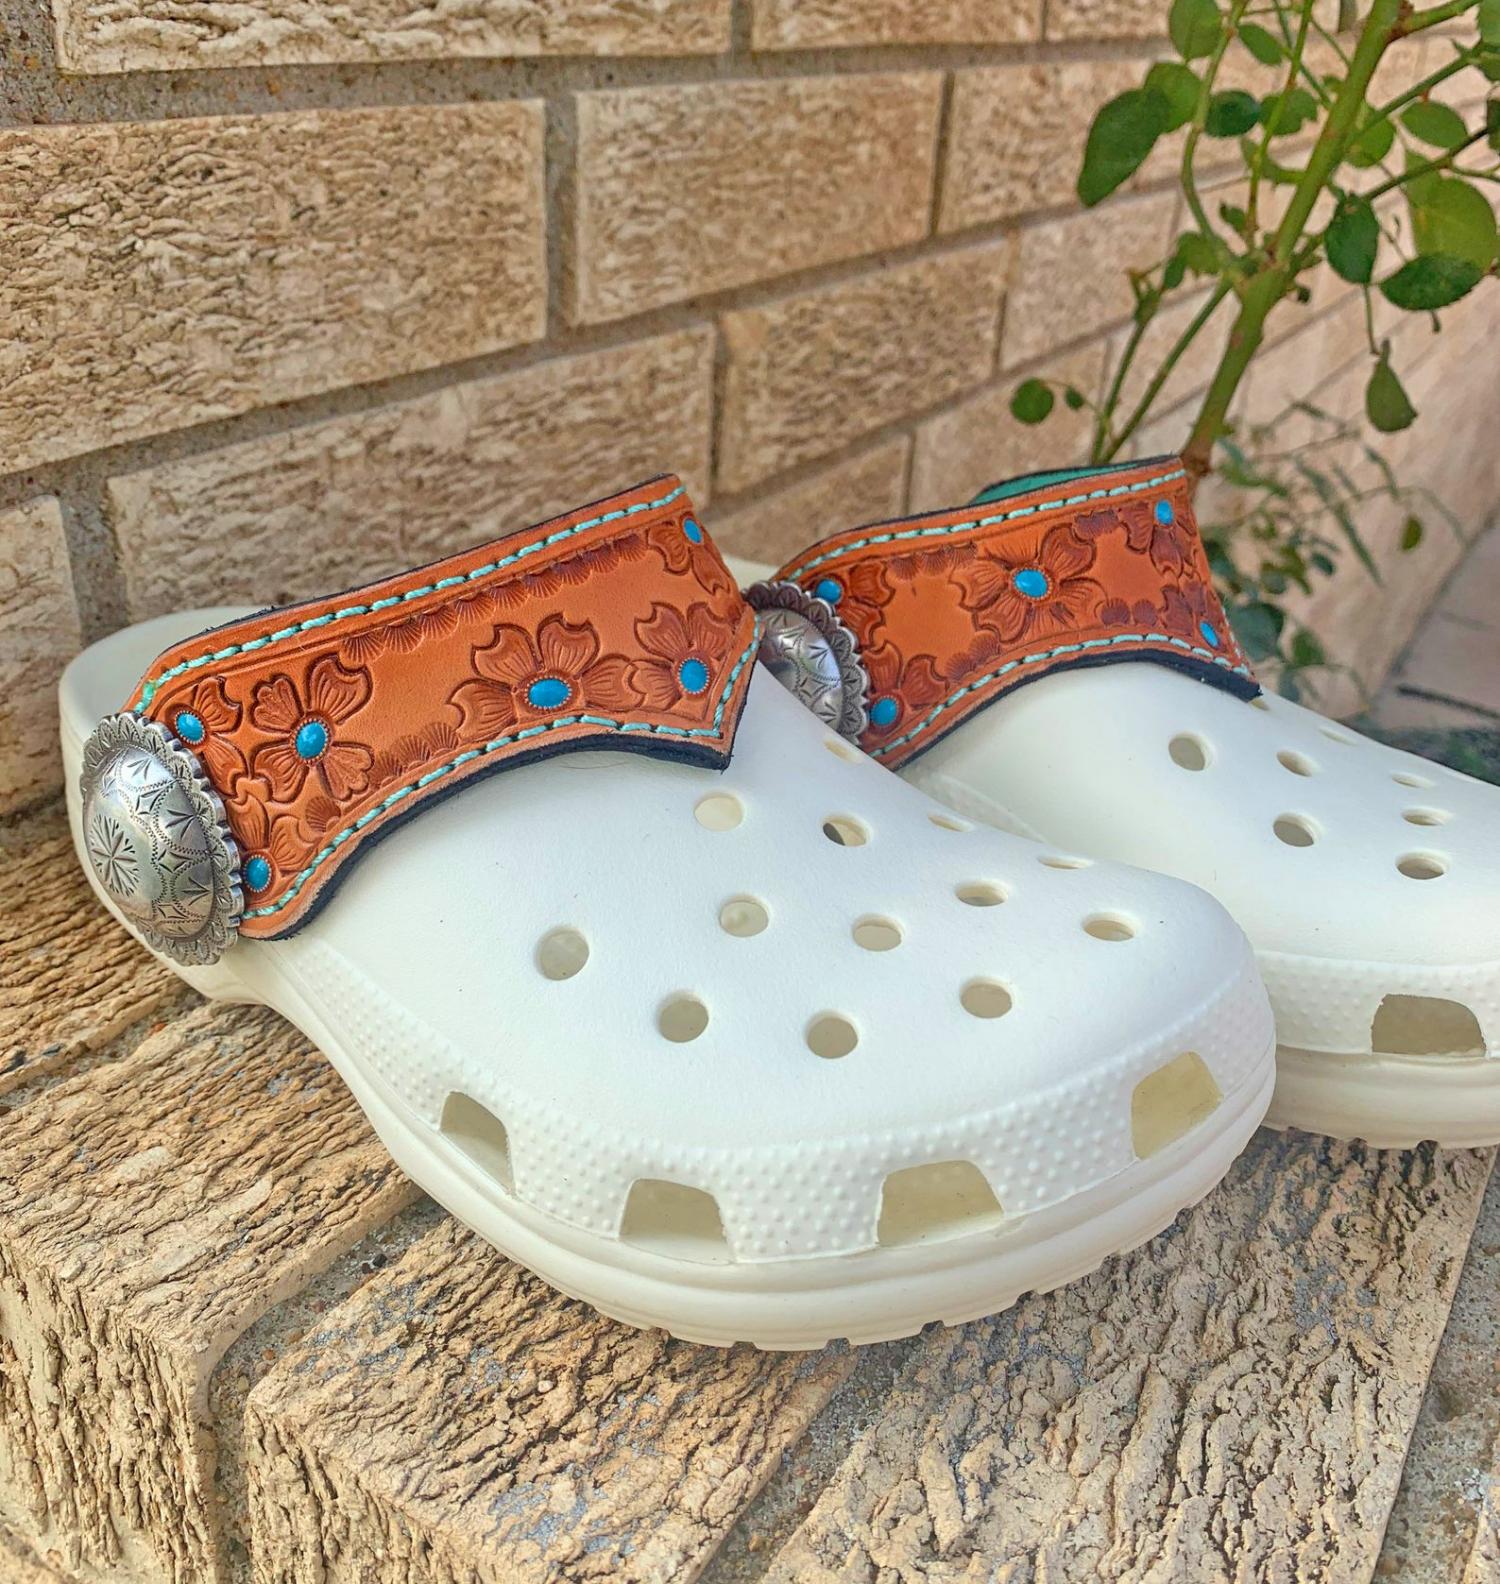 Ranching Crocs - Cowboy Boot Crocs